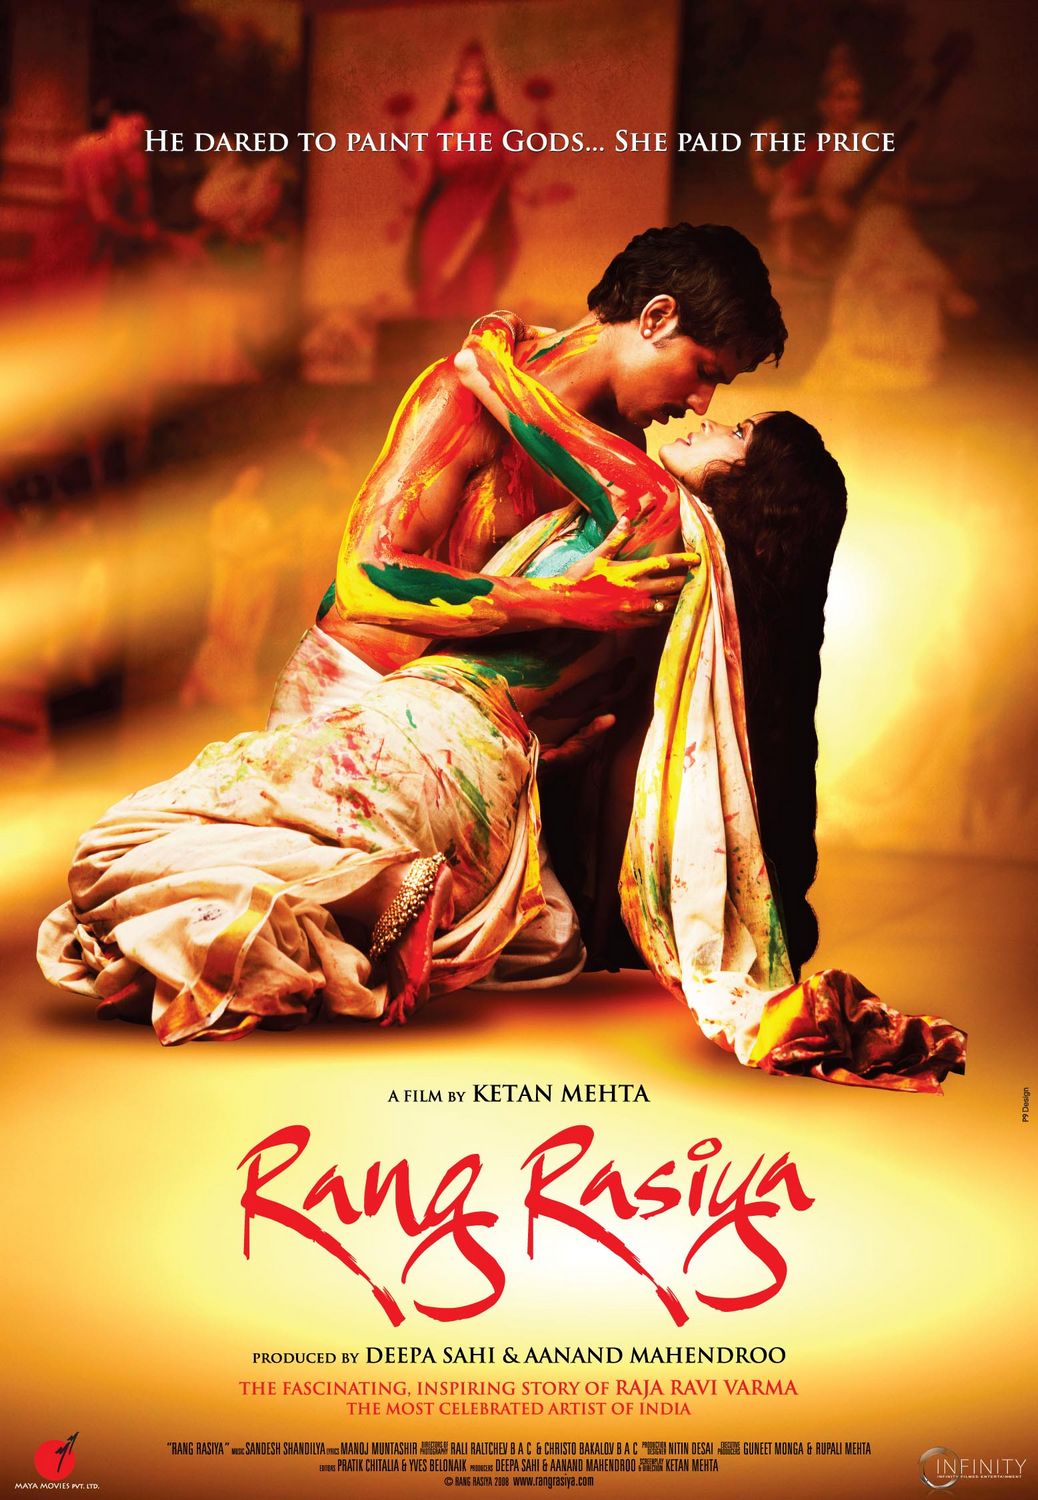 Extra Large Movie Poster Image for Rang rasiya (#4 of 9)